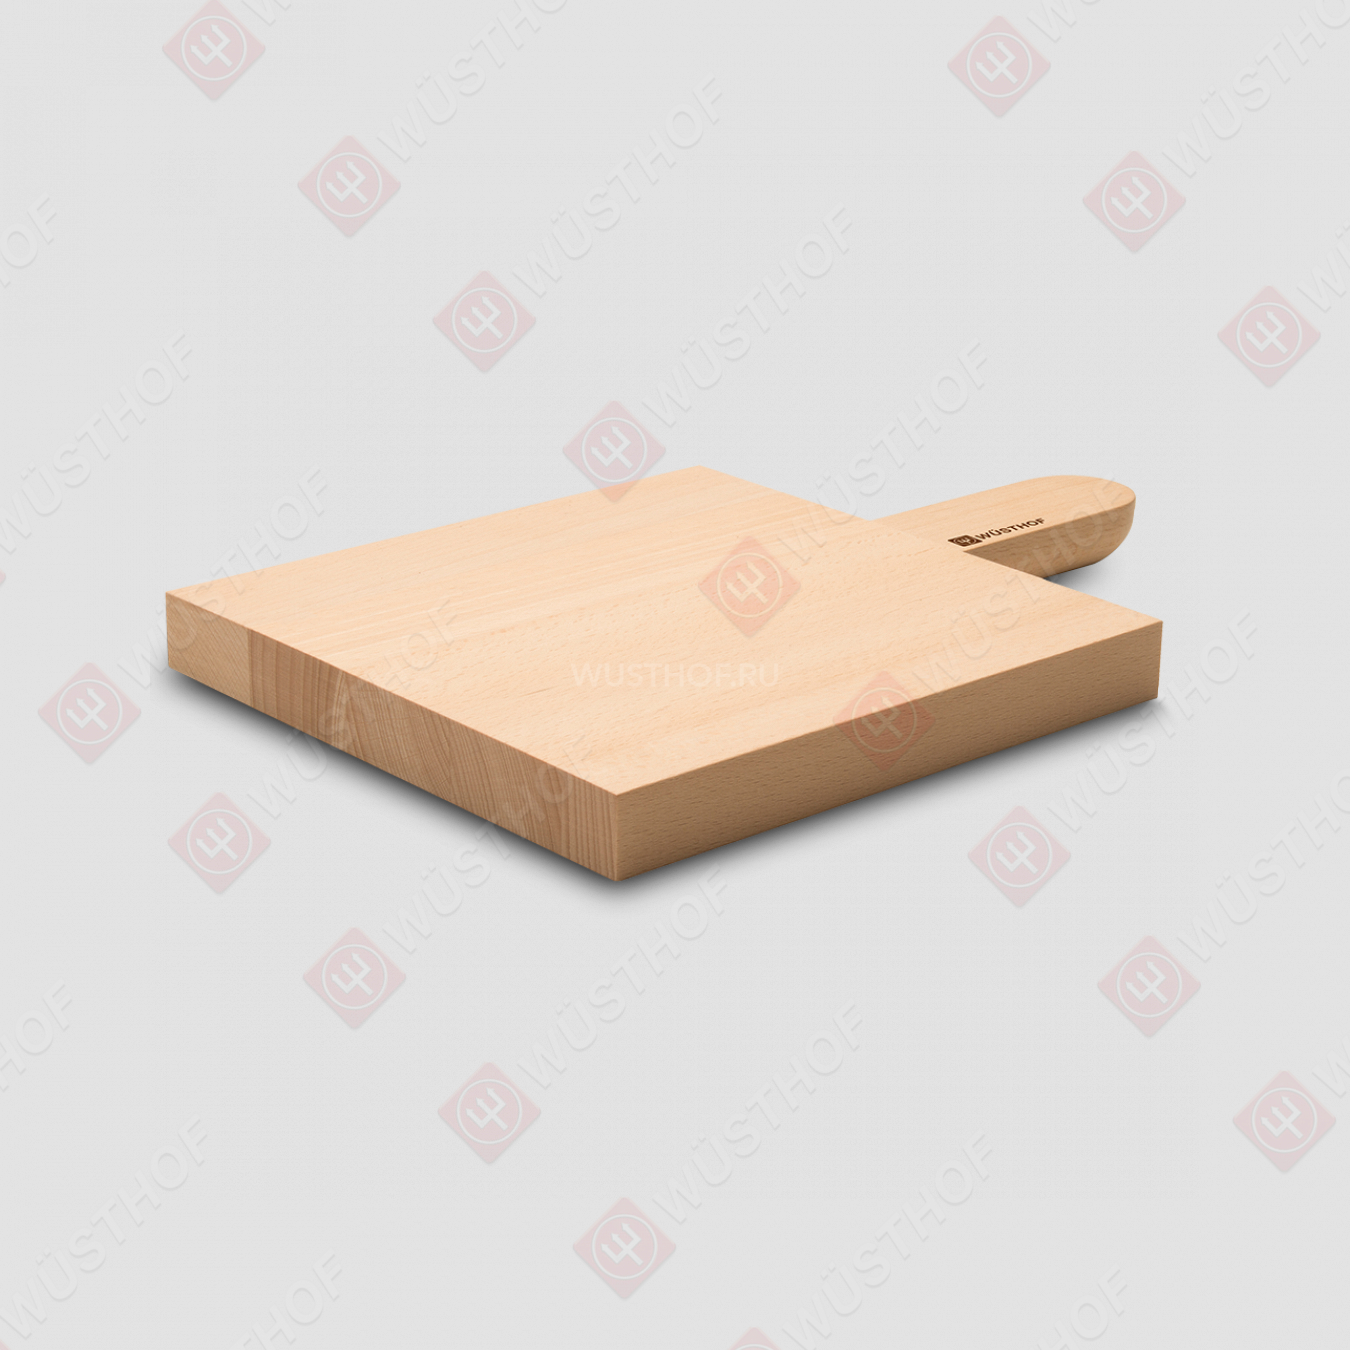 Доска разделочная деревянная 21х21х2.5 см, серия Knife blocks, WUESTHOF, Германия